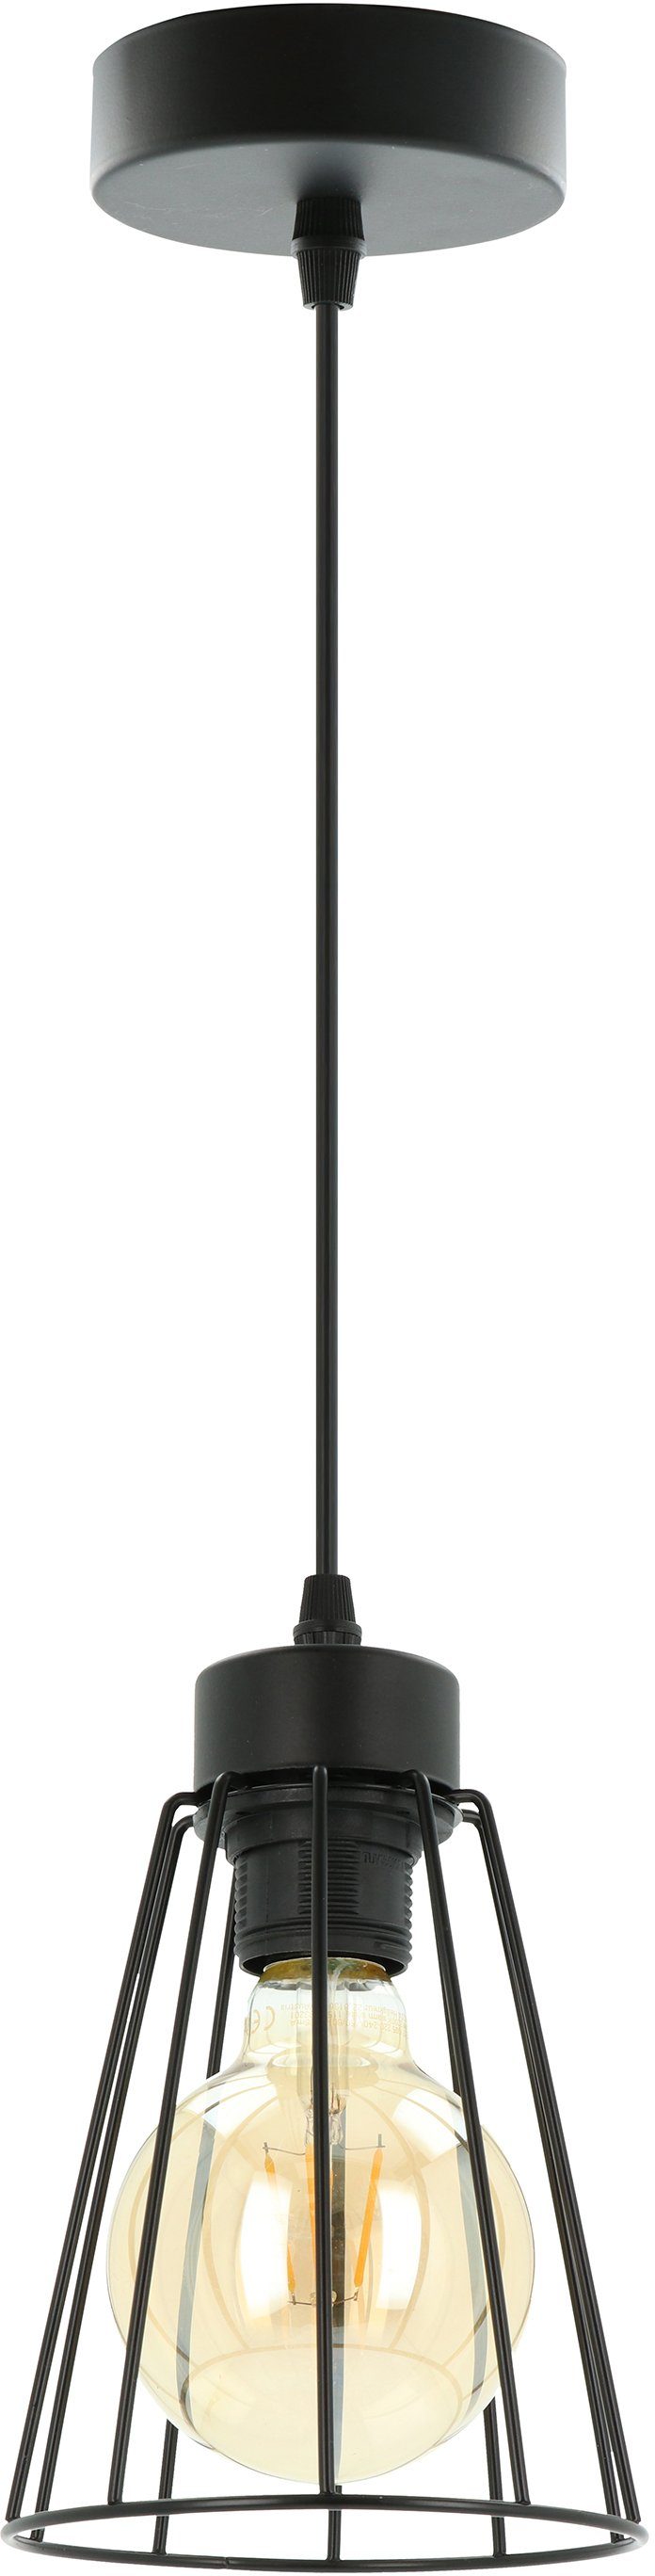 BRITOP LIGHTING Hanglamp ORAZIO Hanglamp, modern design, pendel in te korten, bijpassende LM E27, Made in EU